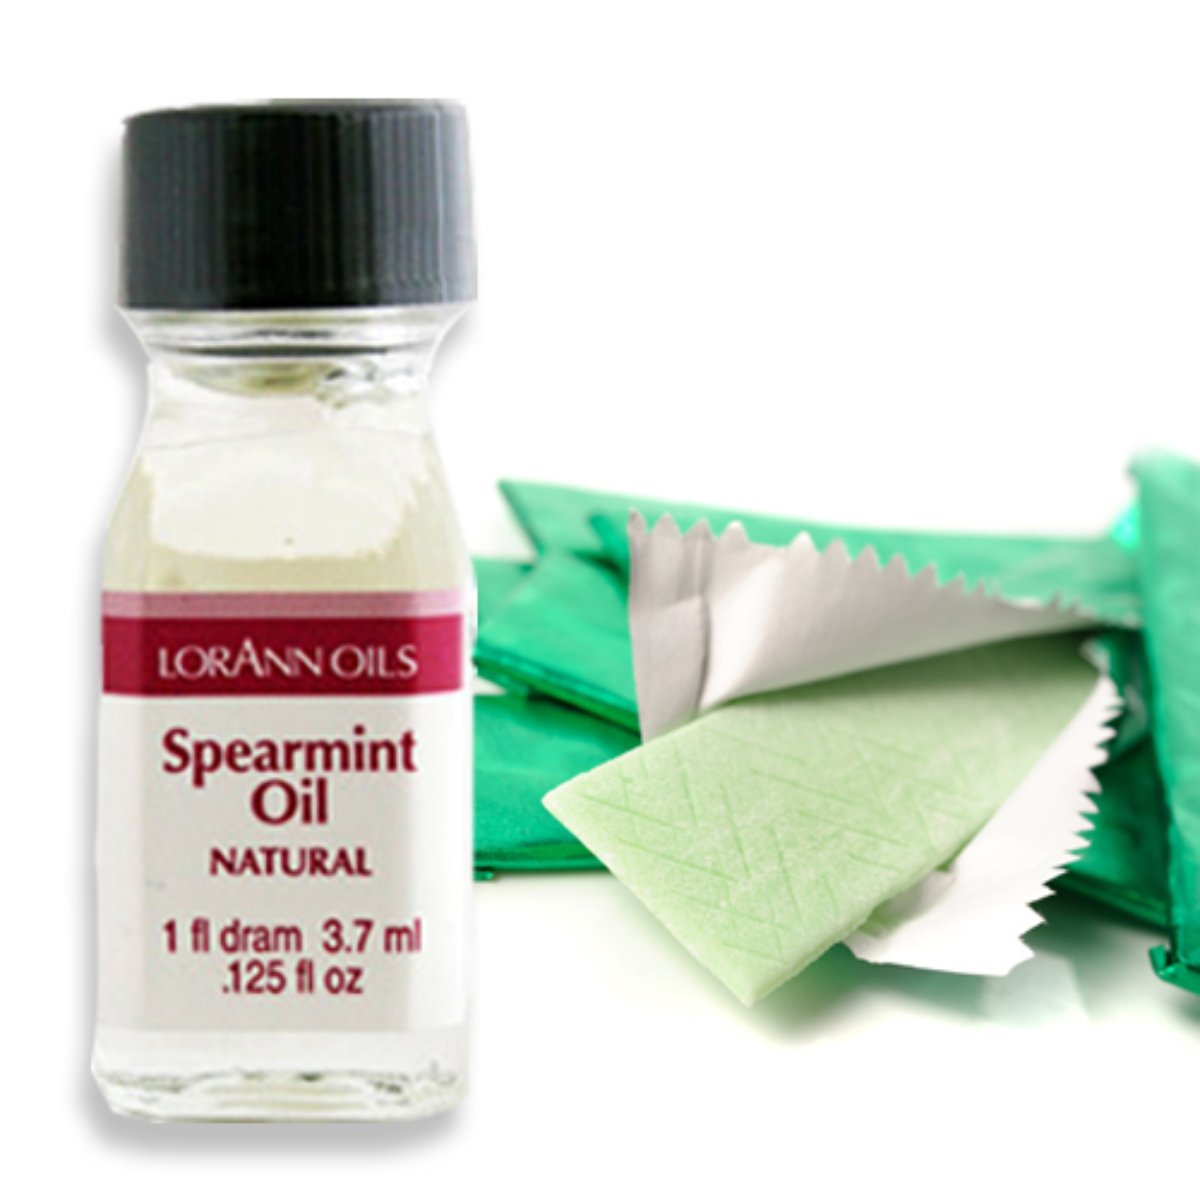 Spearmint Oil, natural Flavor 1 Dram - Bake Supply Plus